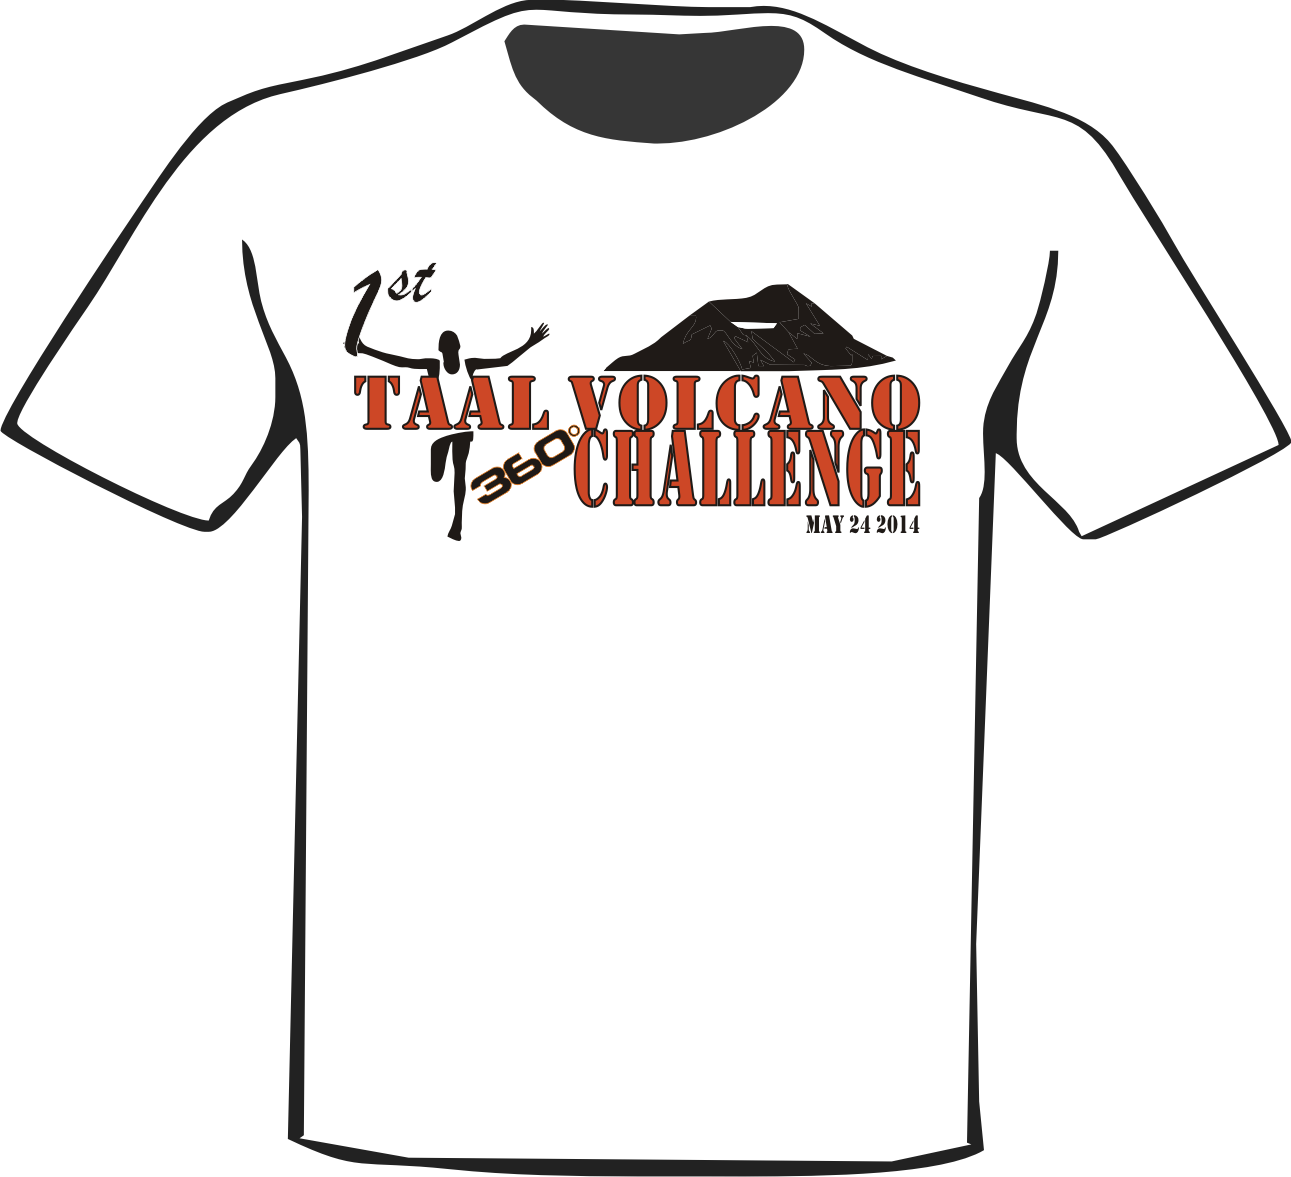 1st-taal-volcano-360-challenge-2014-shirt